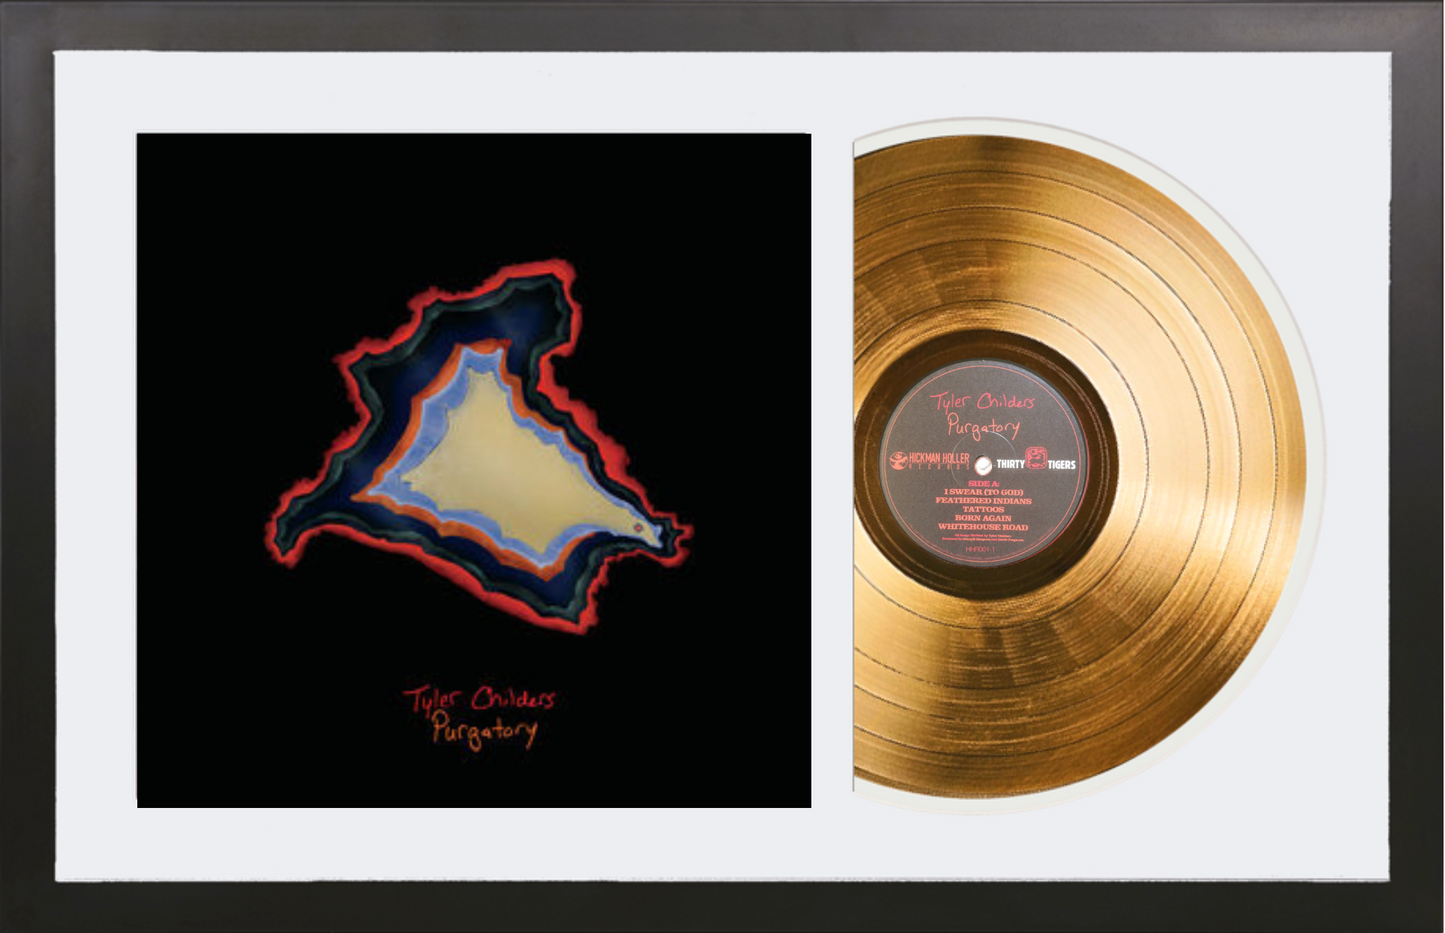 Tyler Childers - Purgatory - Limited Edition, 14K Gold Album